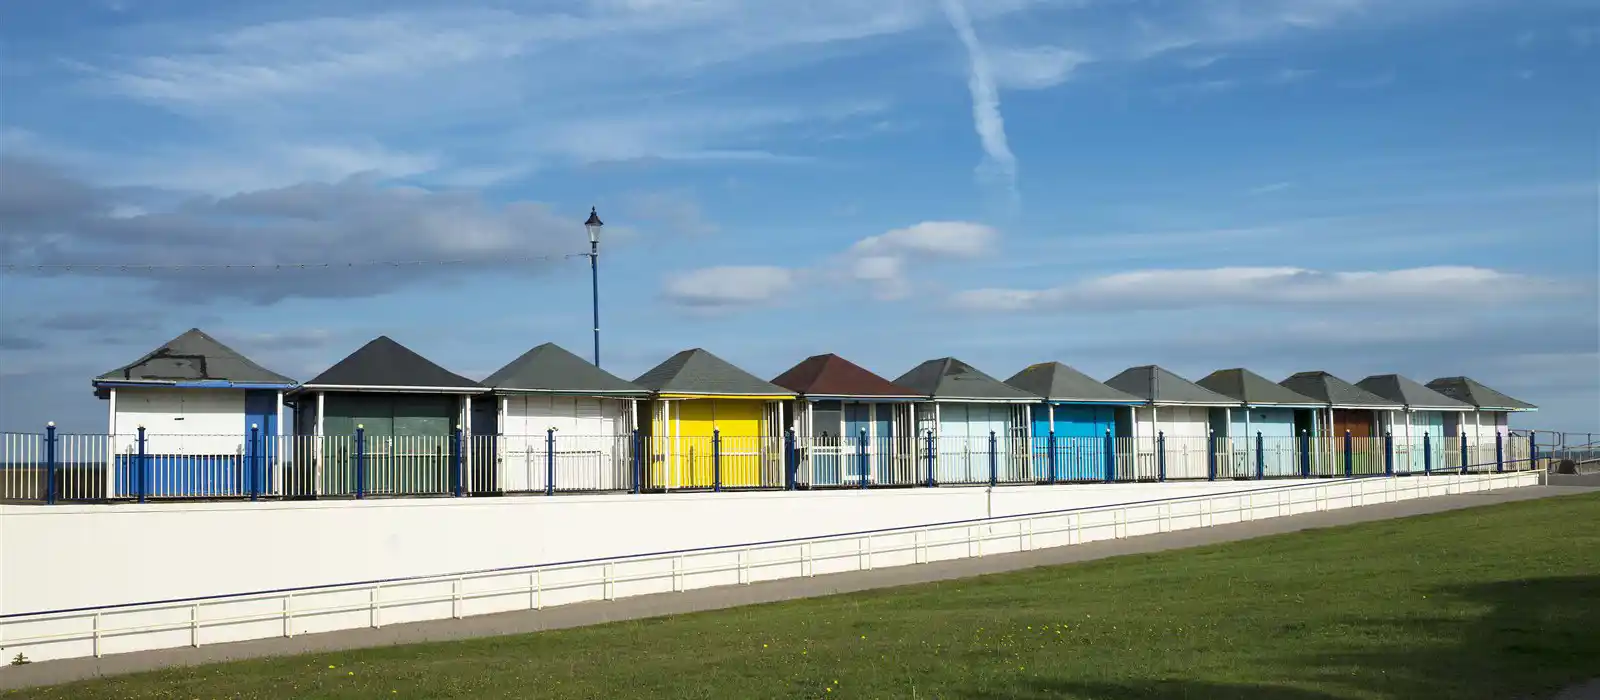 Colourful beach huts at Sutton-on-Sea